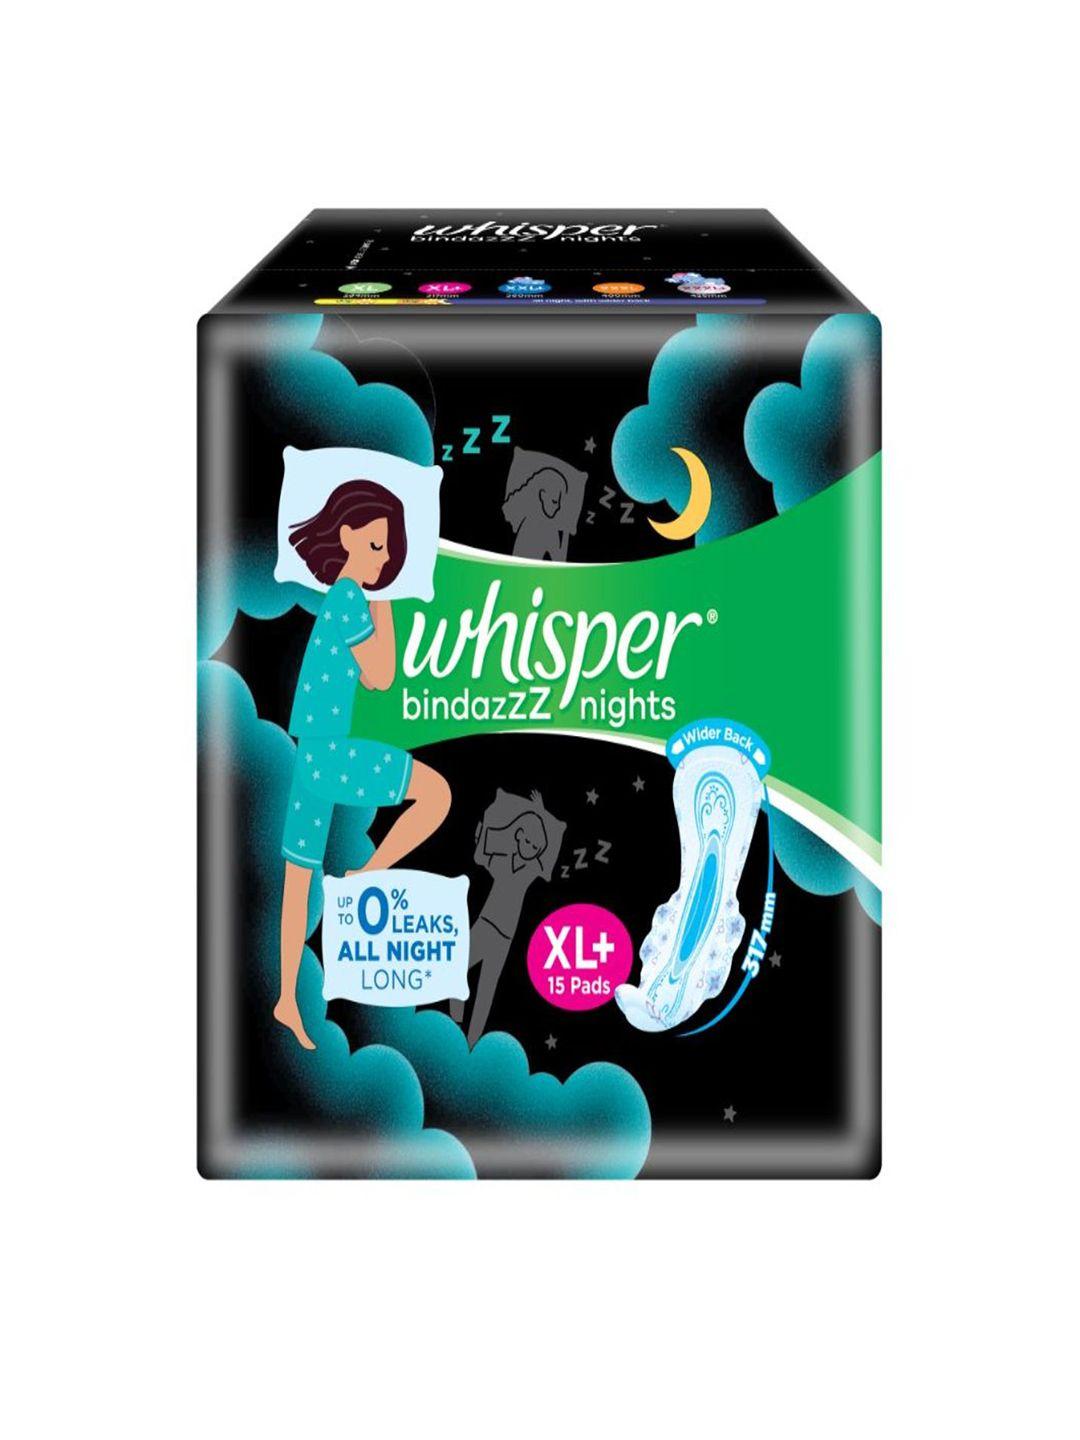 whisper-bindazz-nights-xl+-sanitary-pads---15-pads